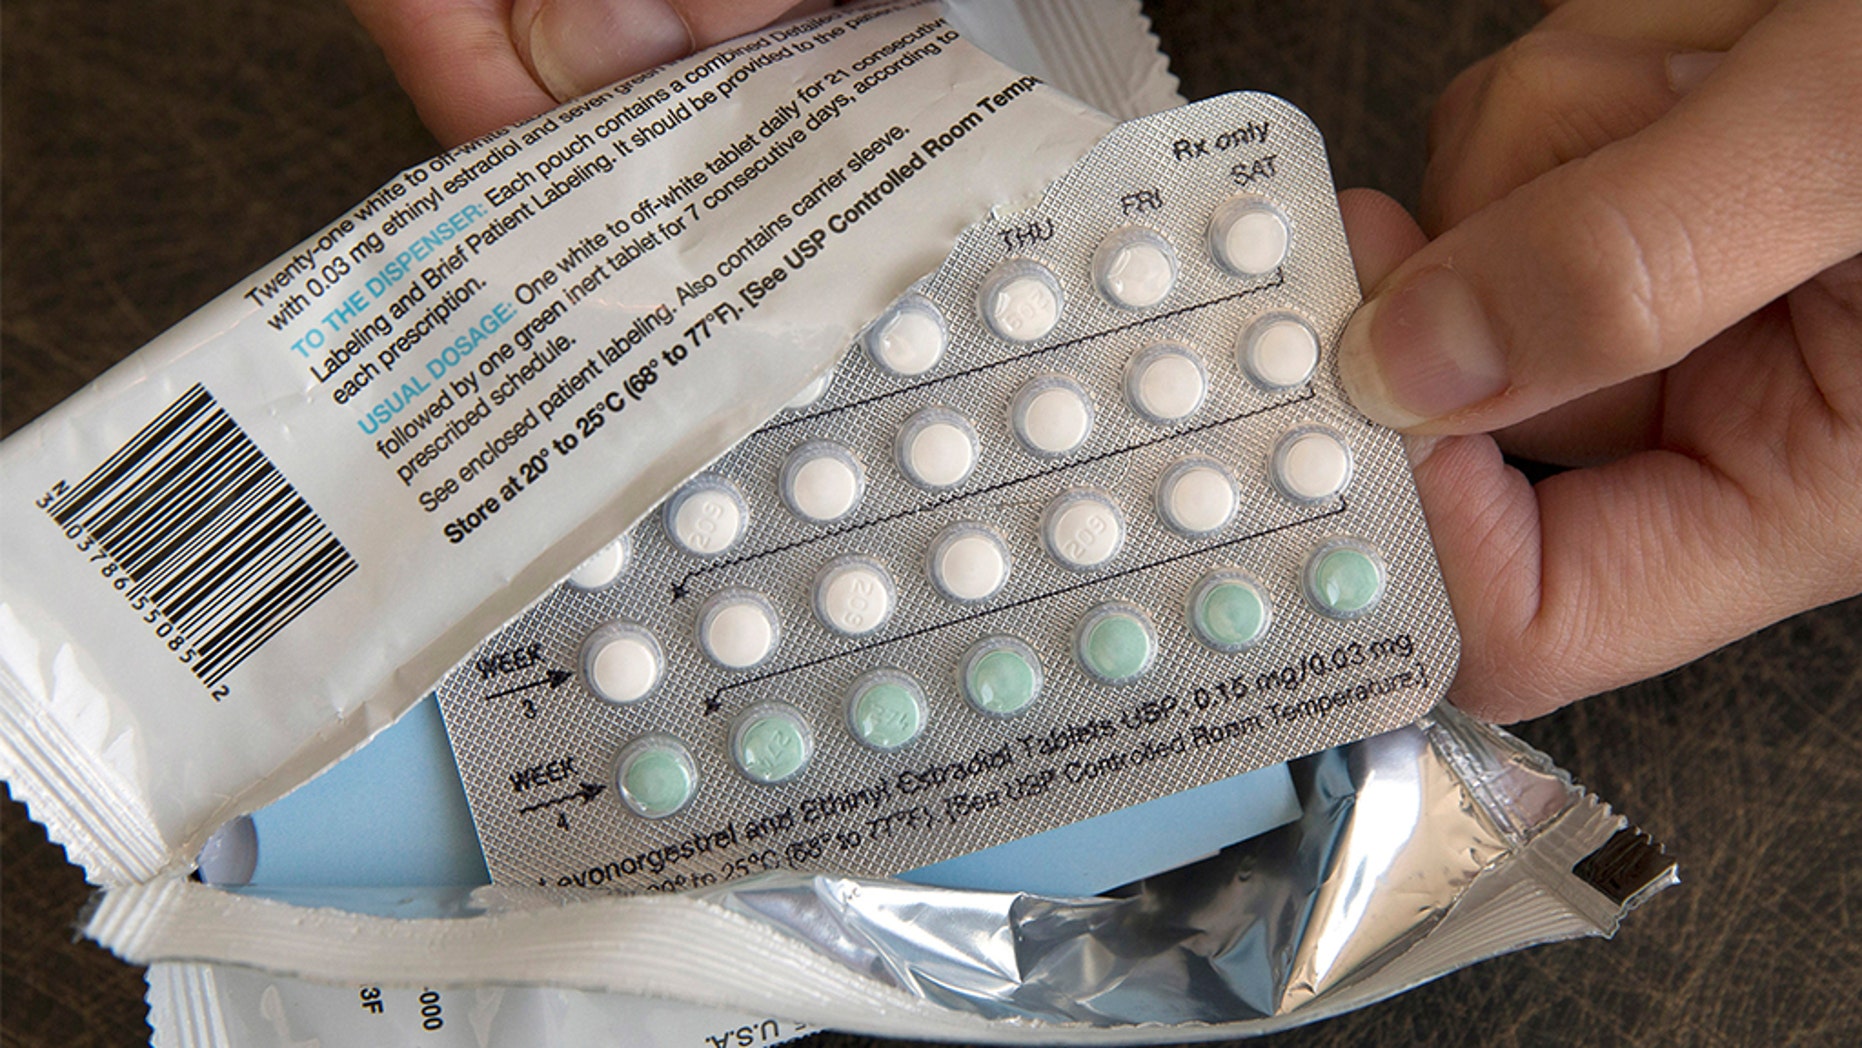 Judge blocks Trump administration birth control coverage rules in 13 states, DC